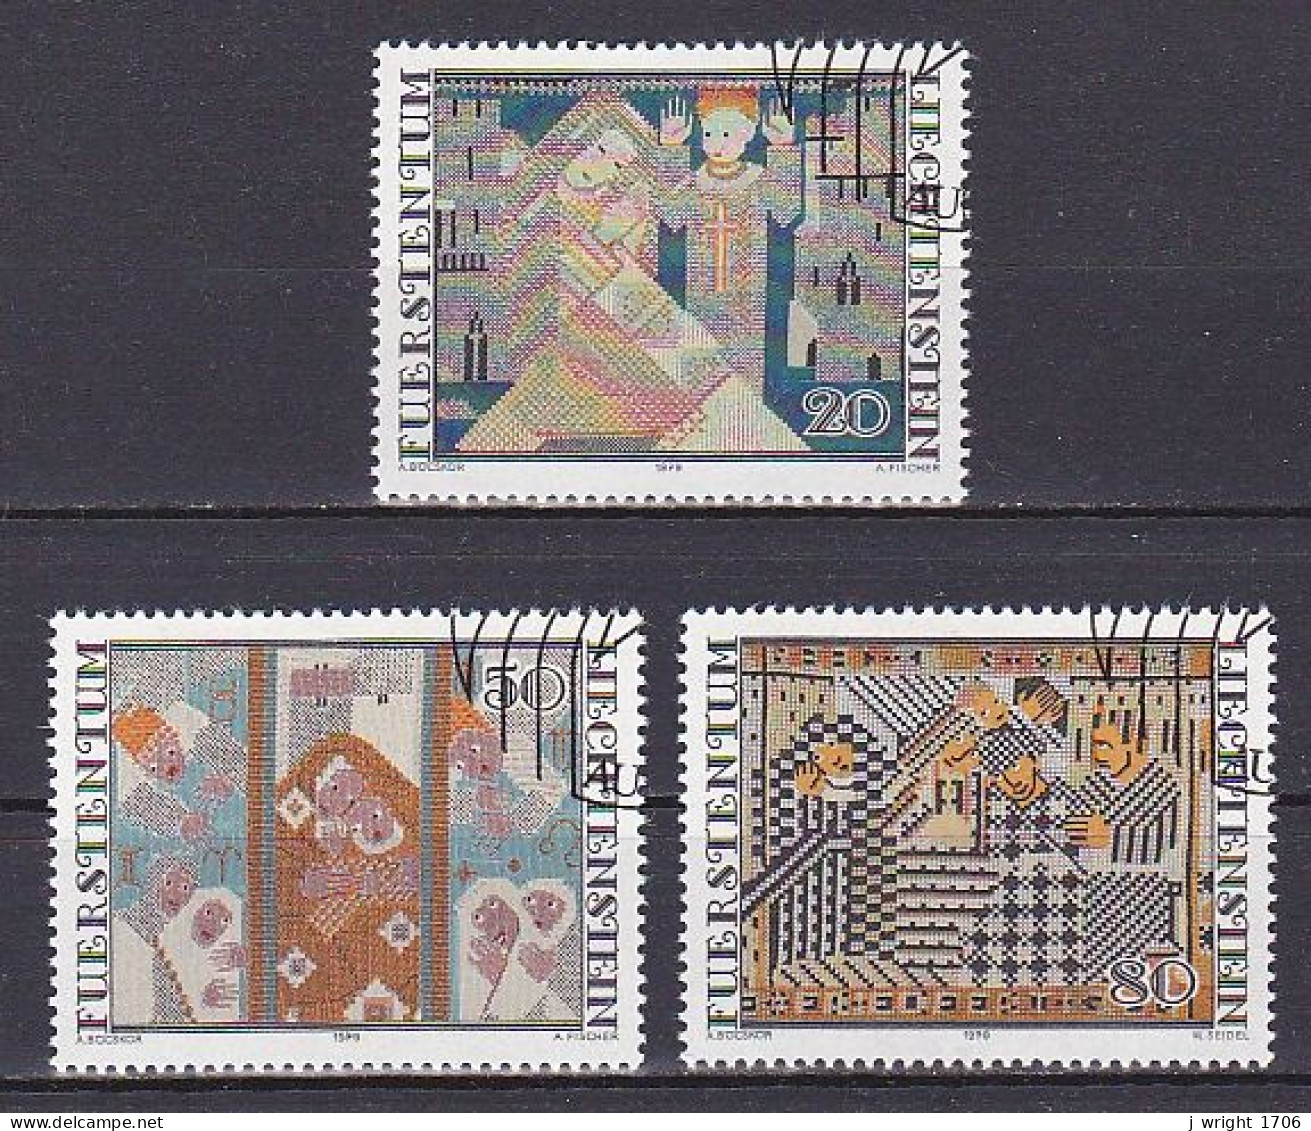 Liechtenstein, 1979, Christmas, Set, CTO - Used Stamps